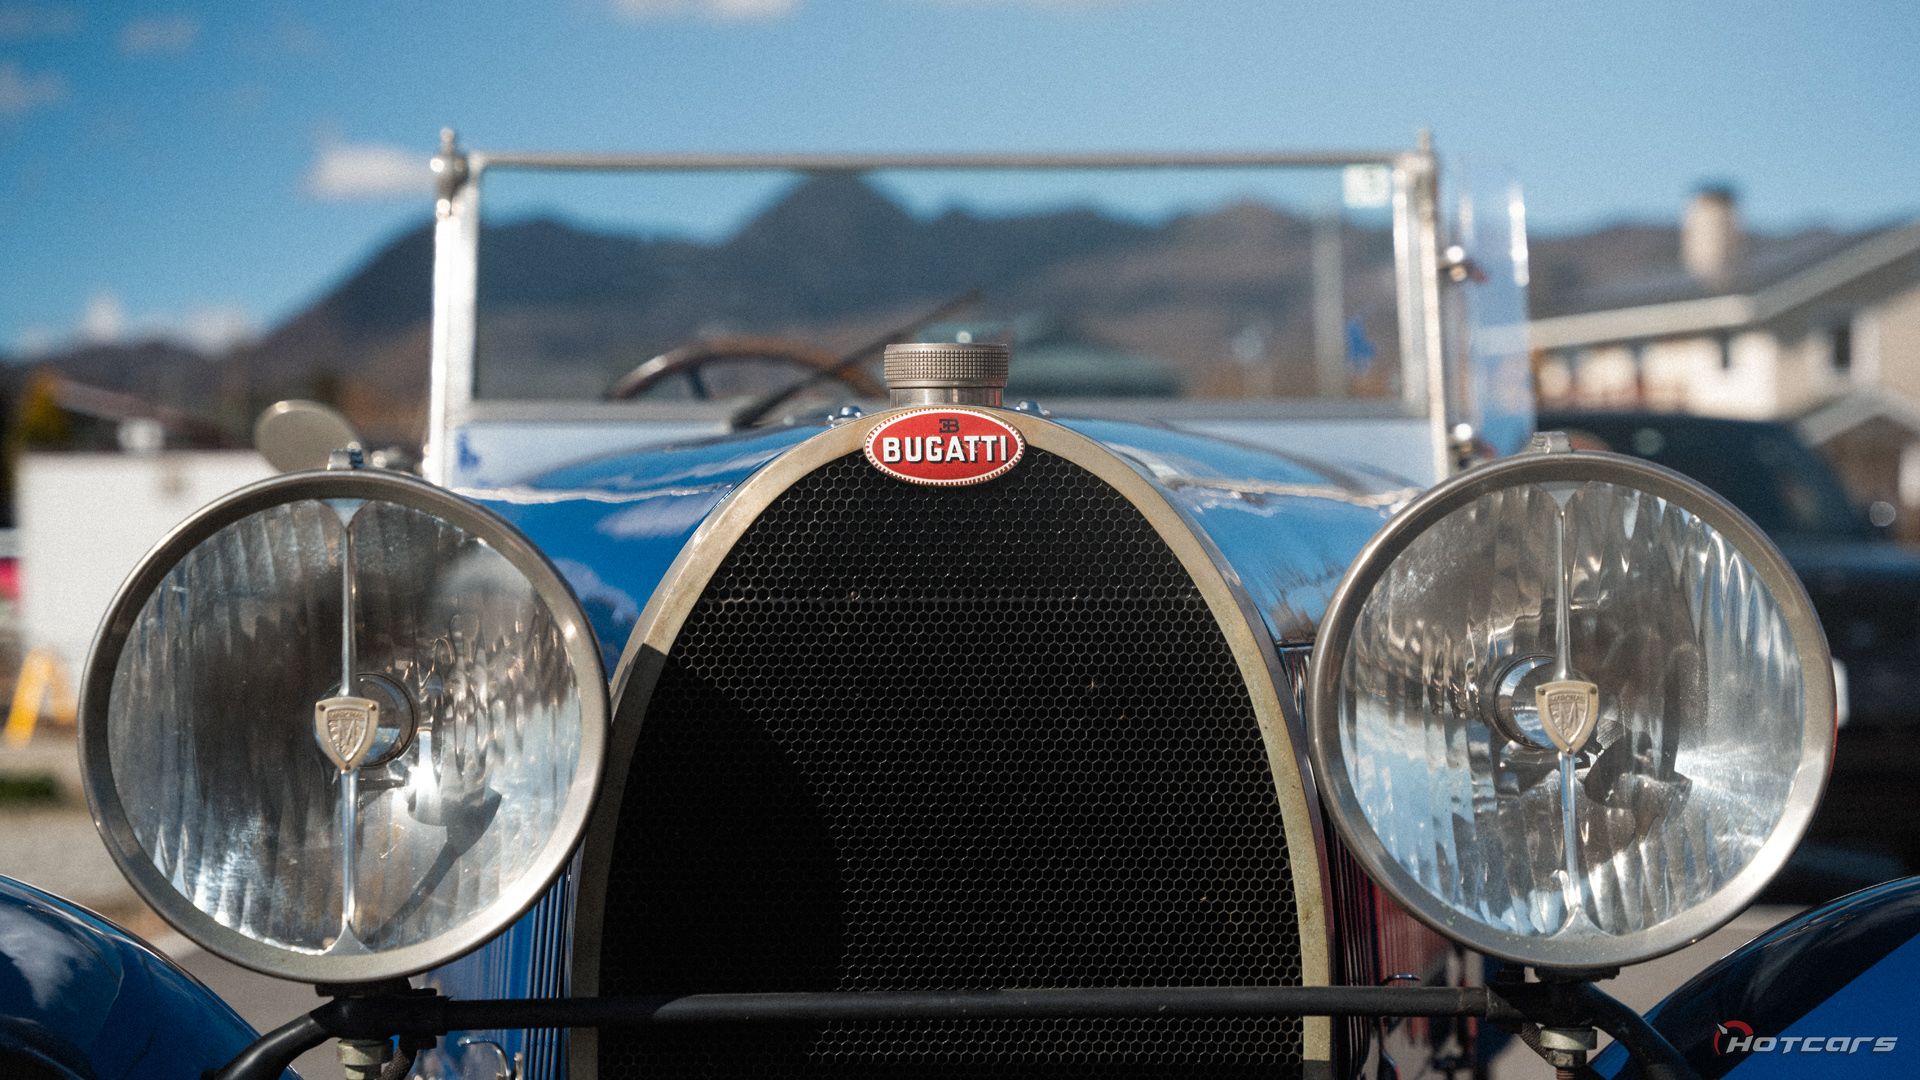 Bugatti T44 front grille close-up